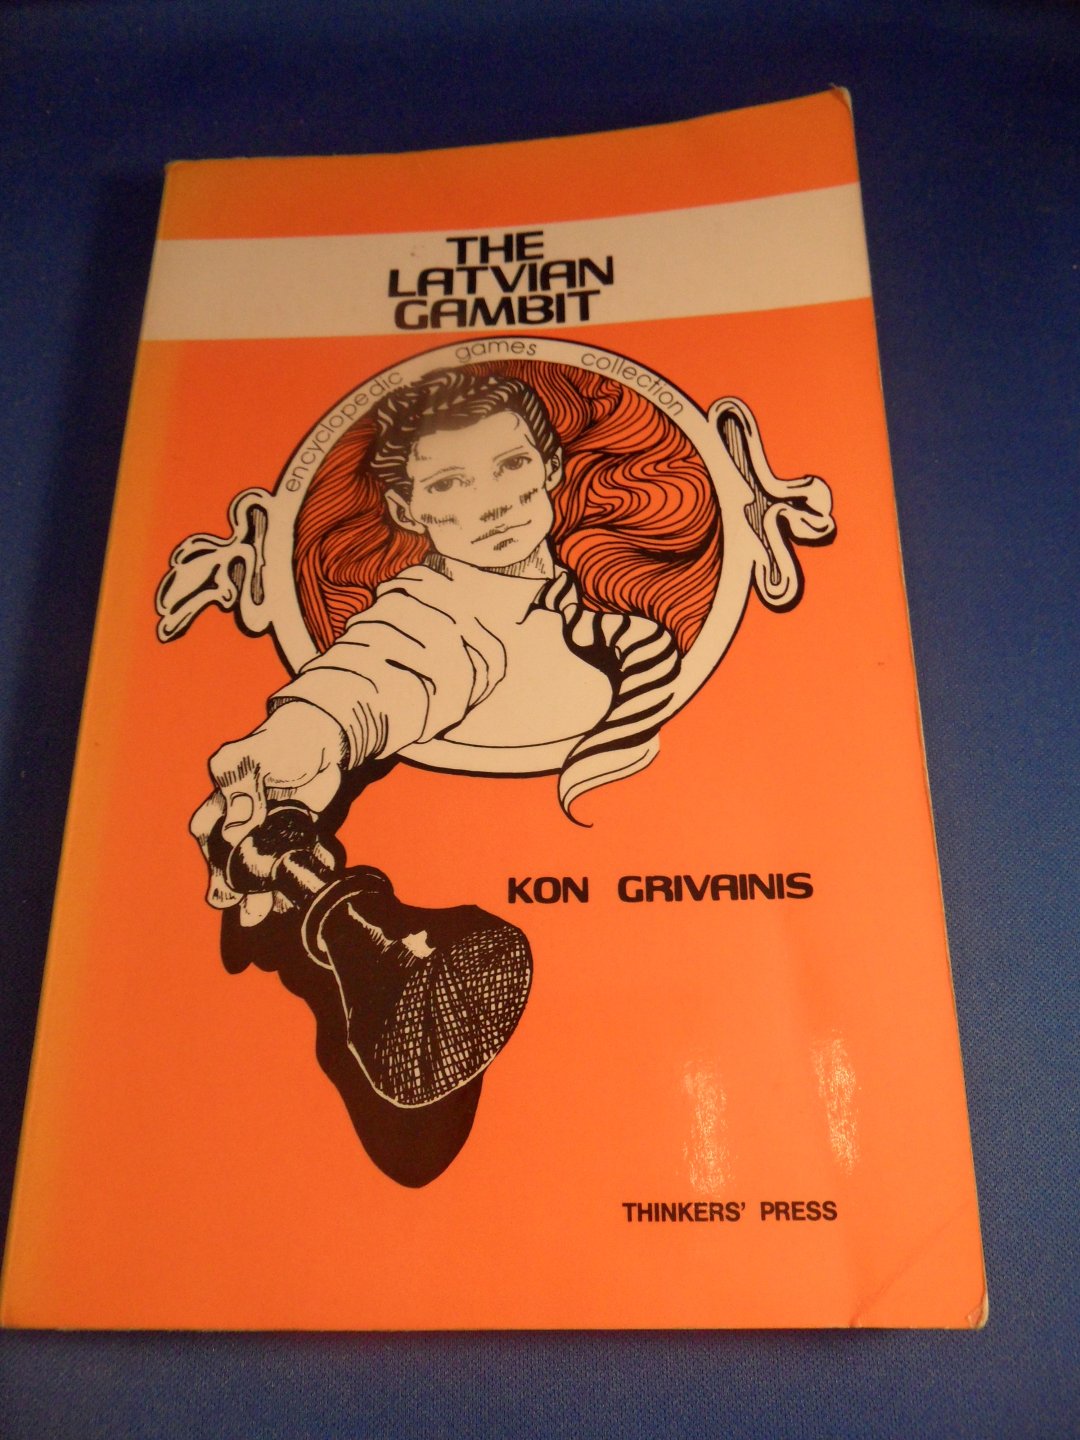 Grivainis, Kon - The Latvian Gambit. Encyclopedic games collection